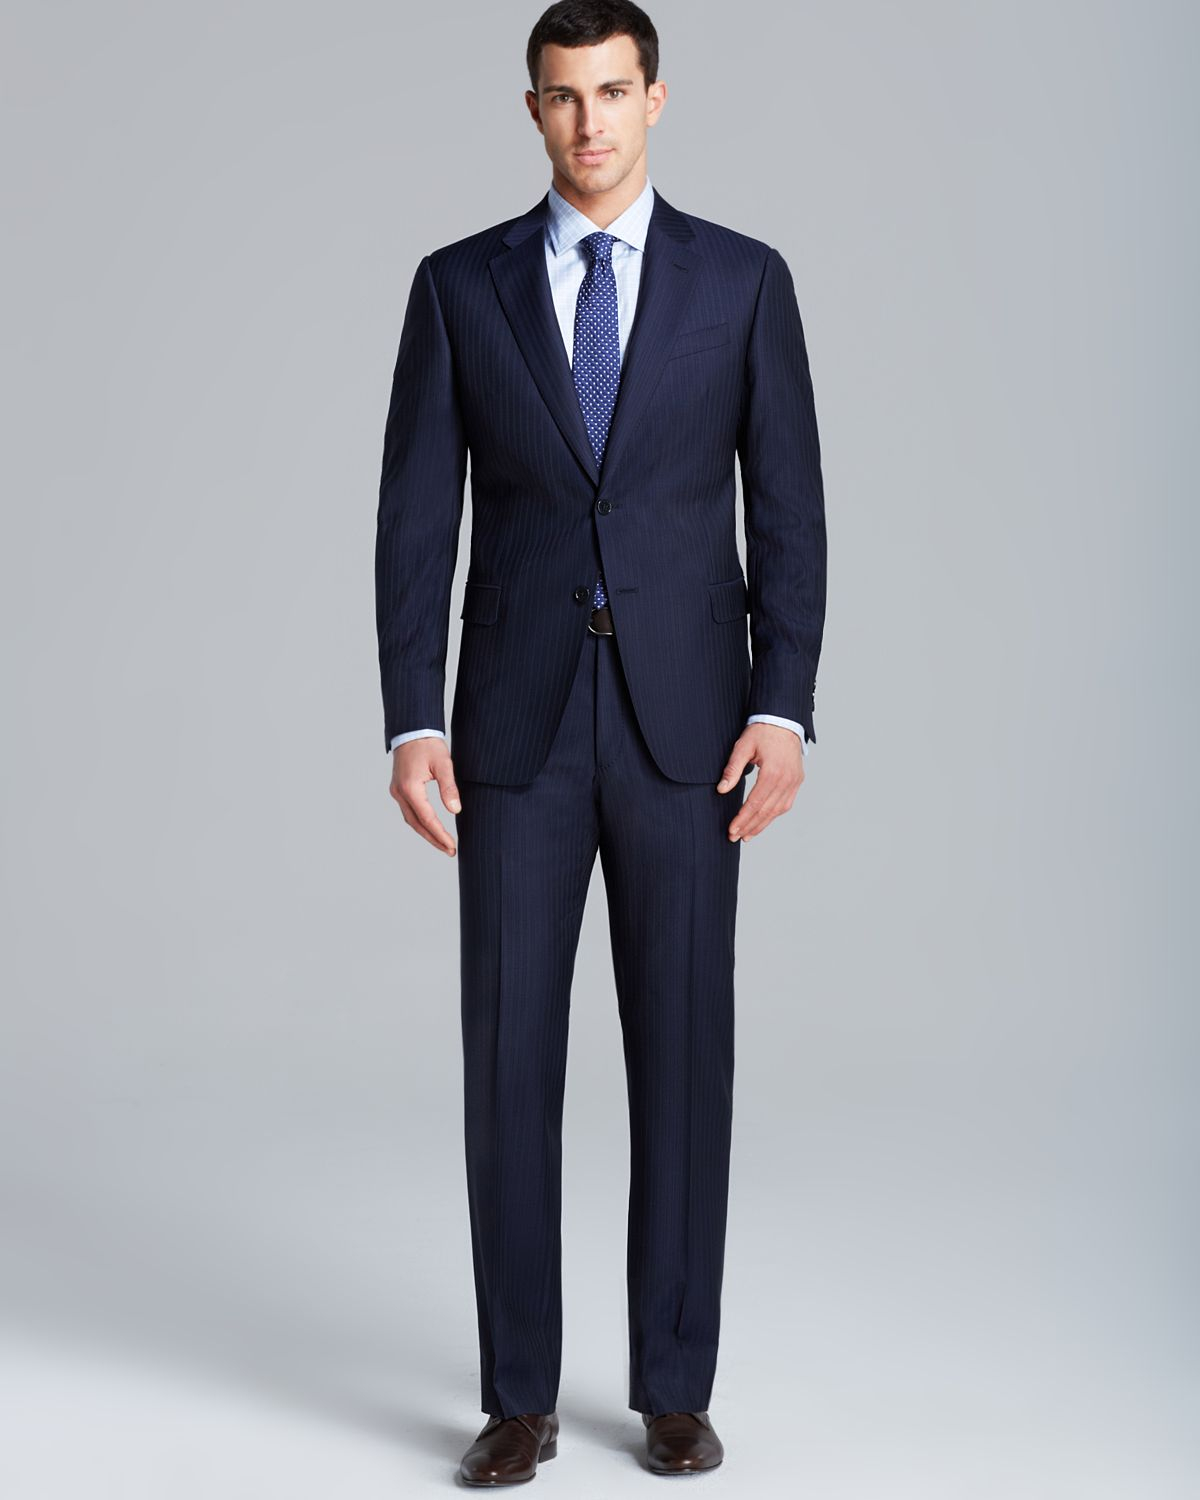 Lyst - Armani Giorgio Stripe Suit - Regular Fit in Blue for Men